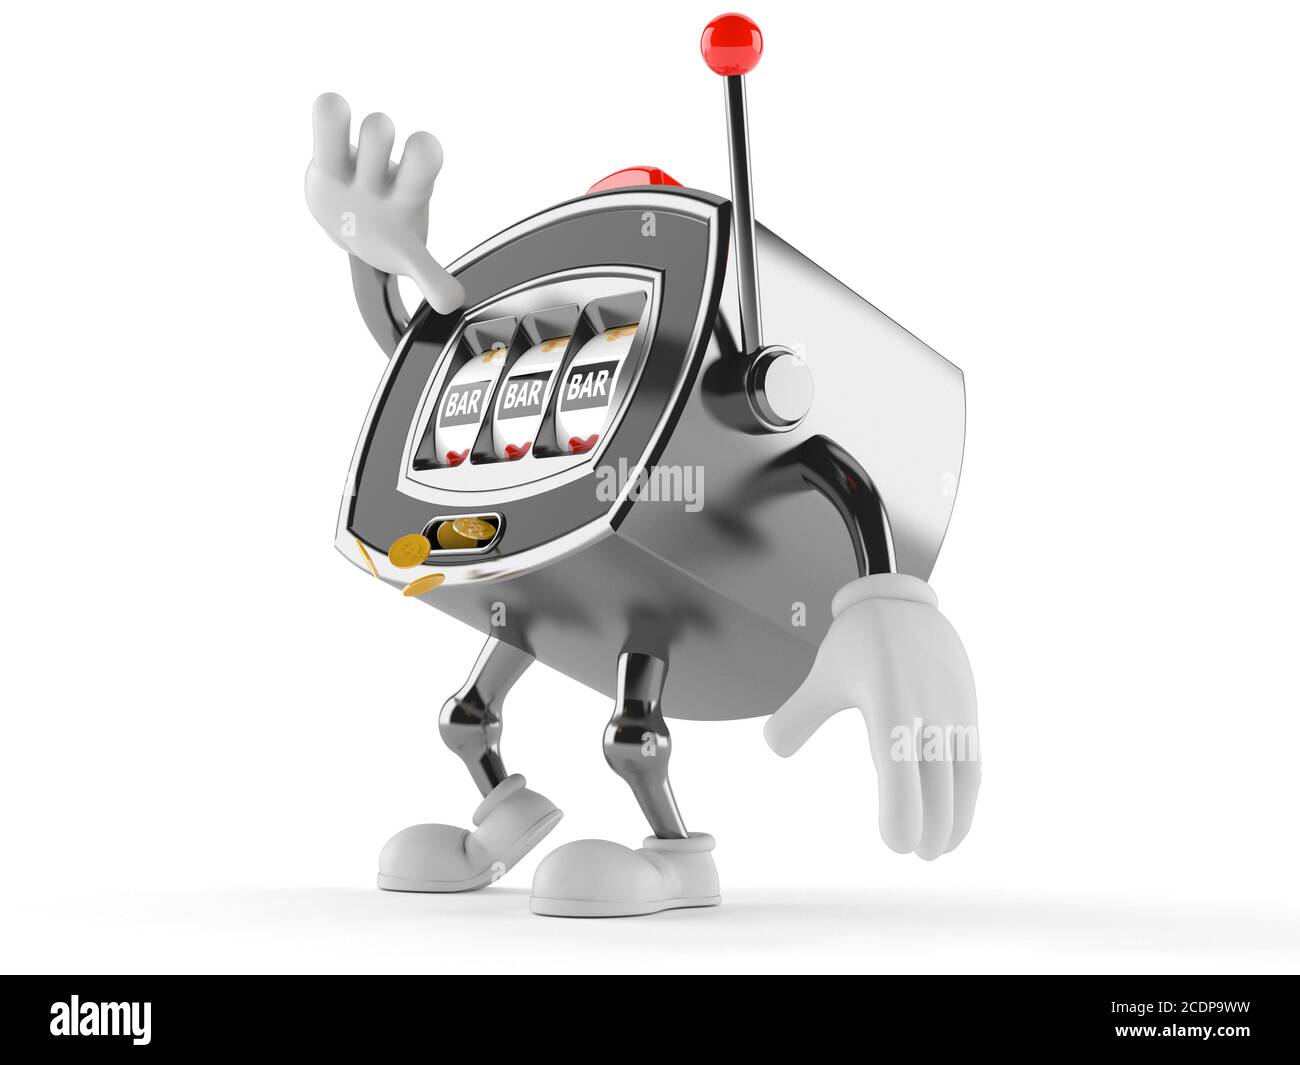 Slot machine character isolated on white background Stock Photo - Alamy